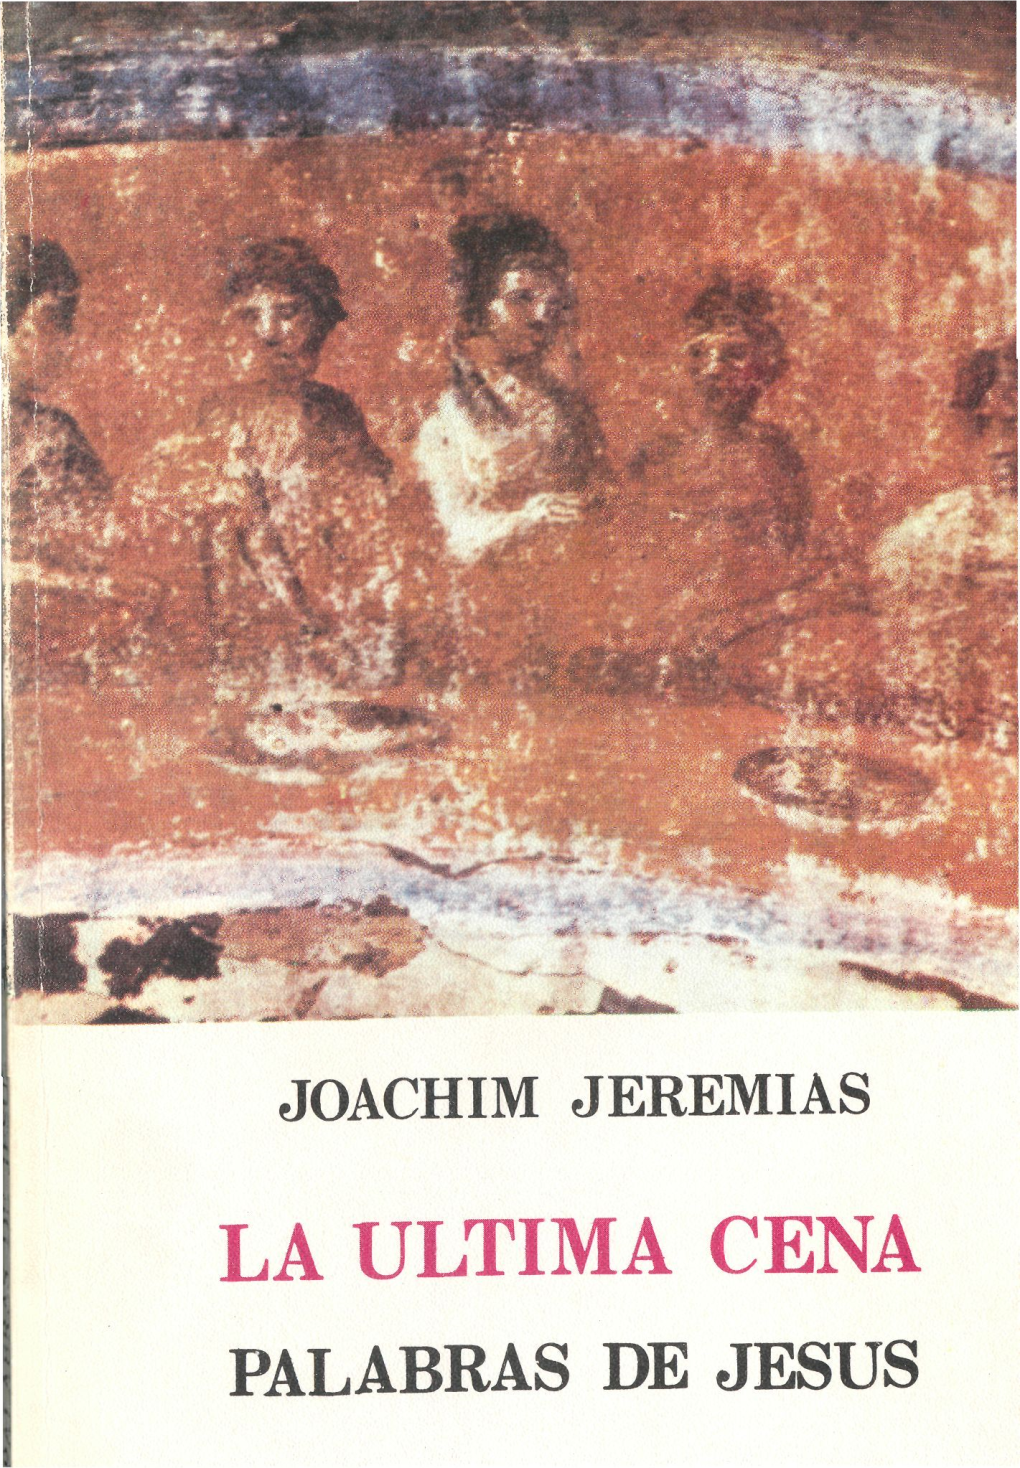 Joachim Jeremías